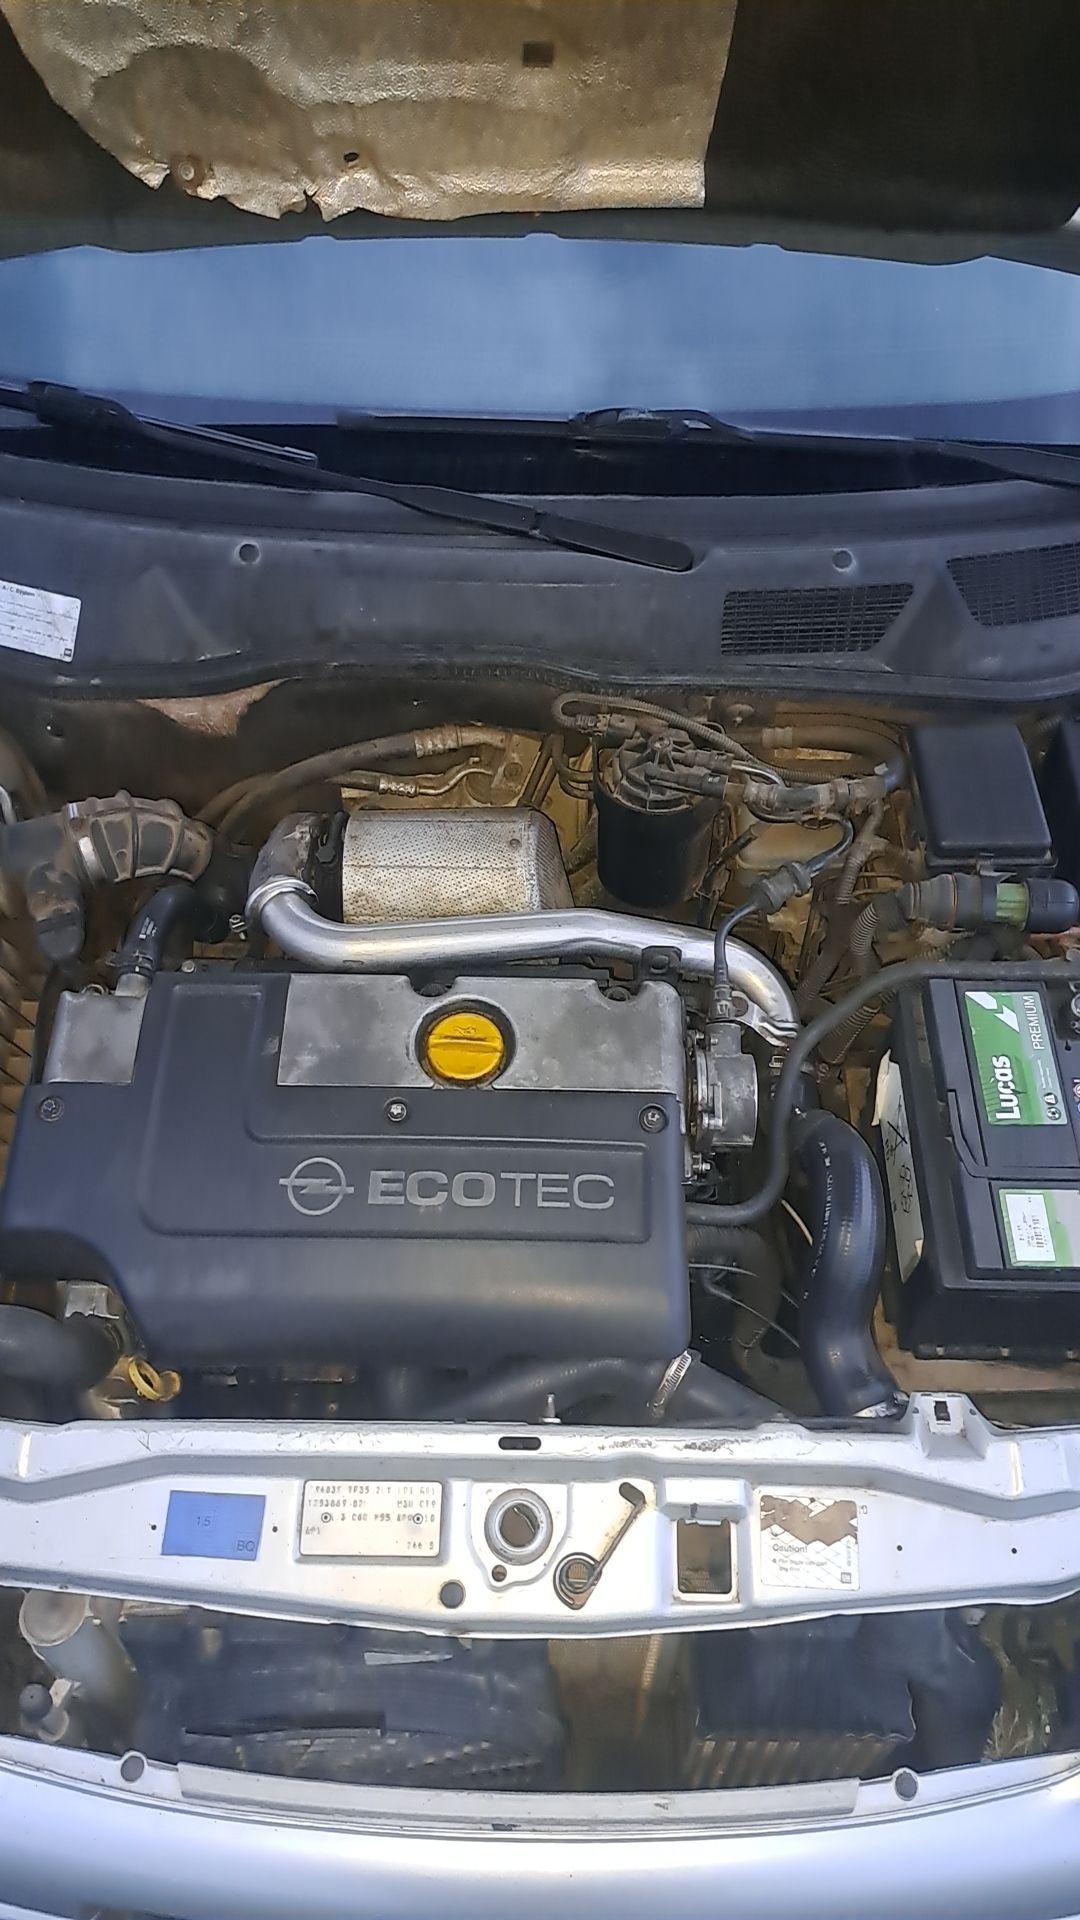 Opel astra g 2.0 dti